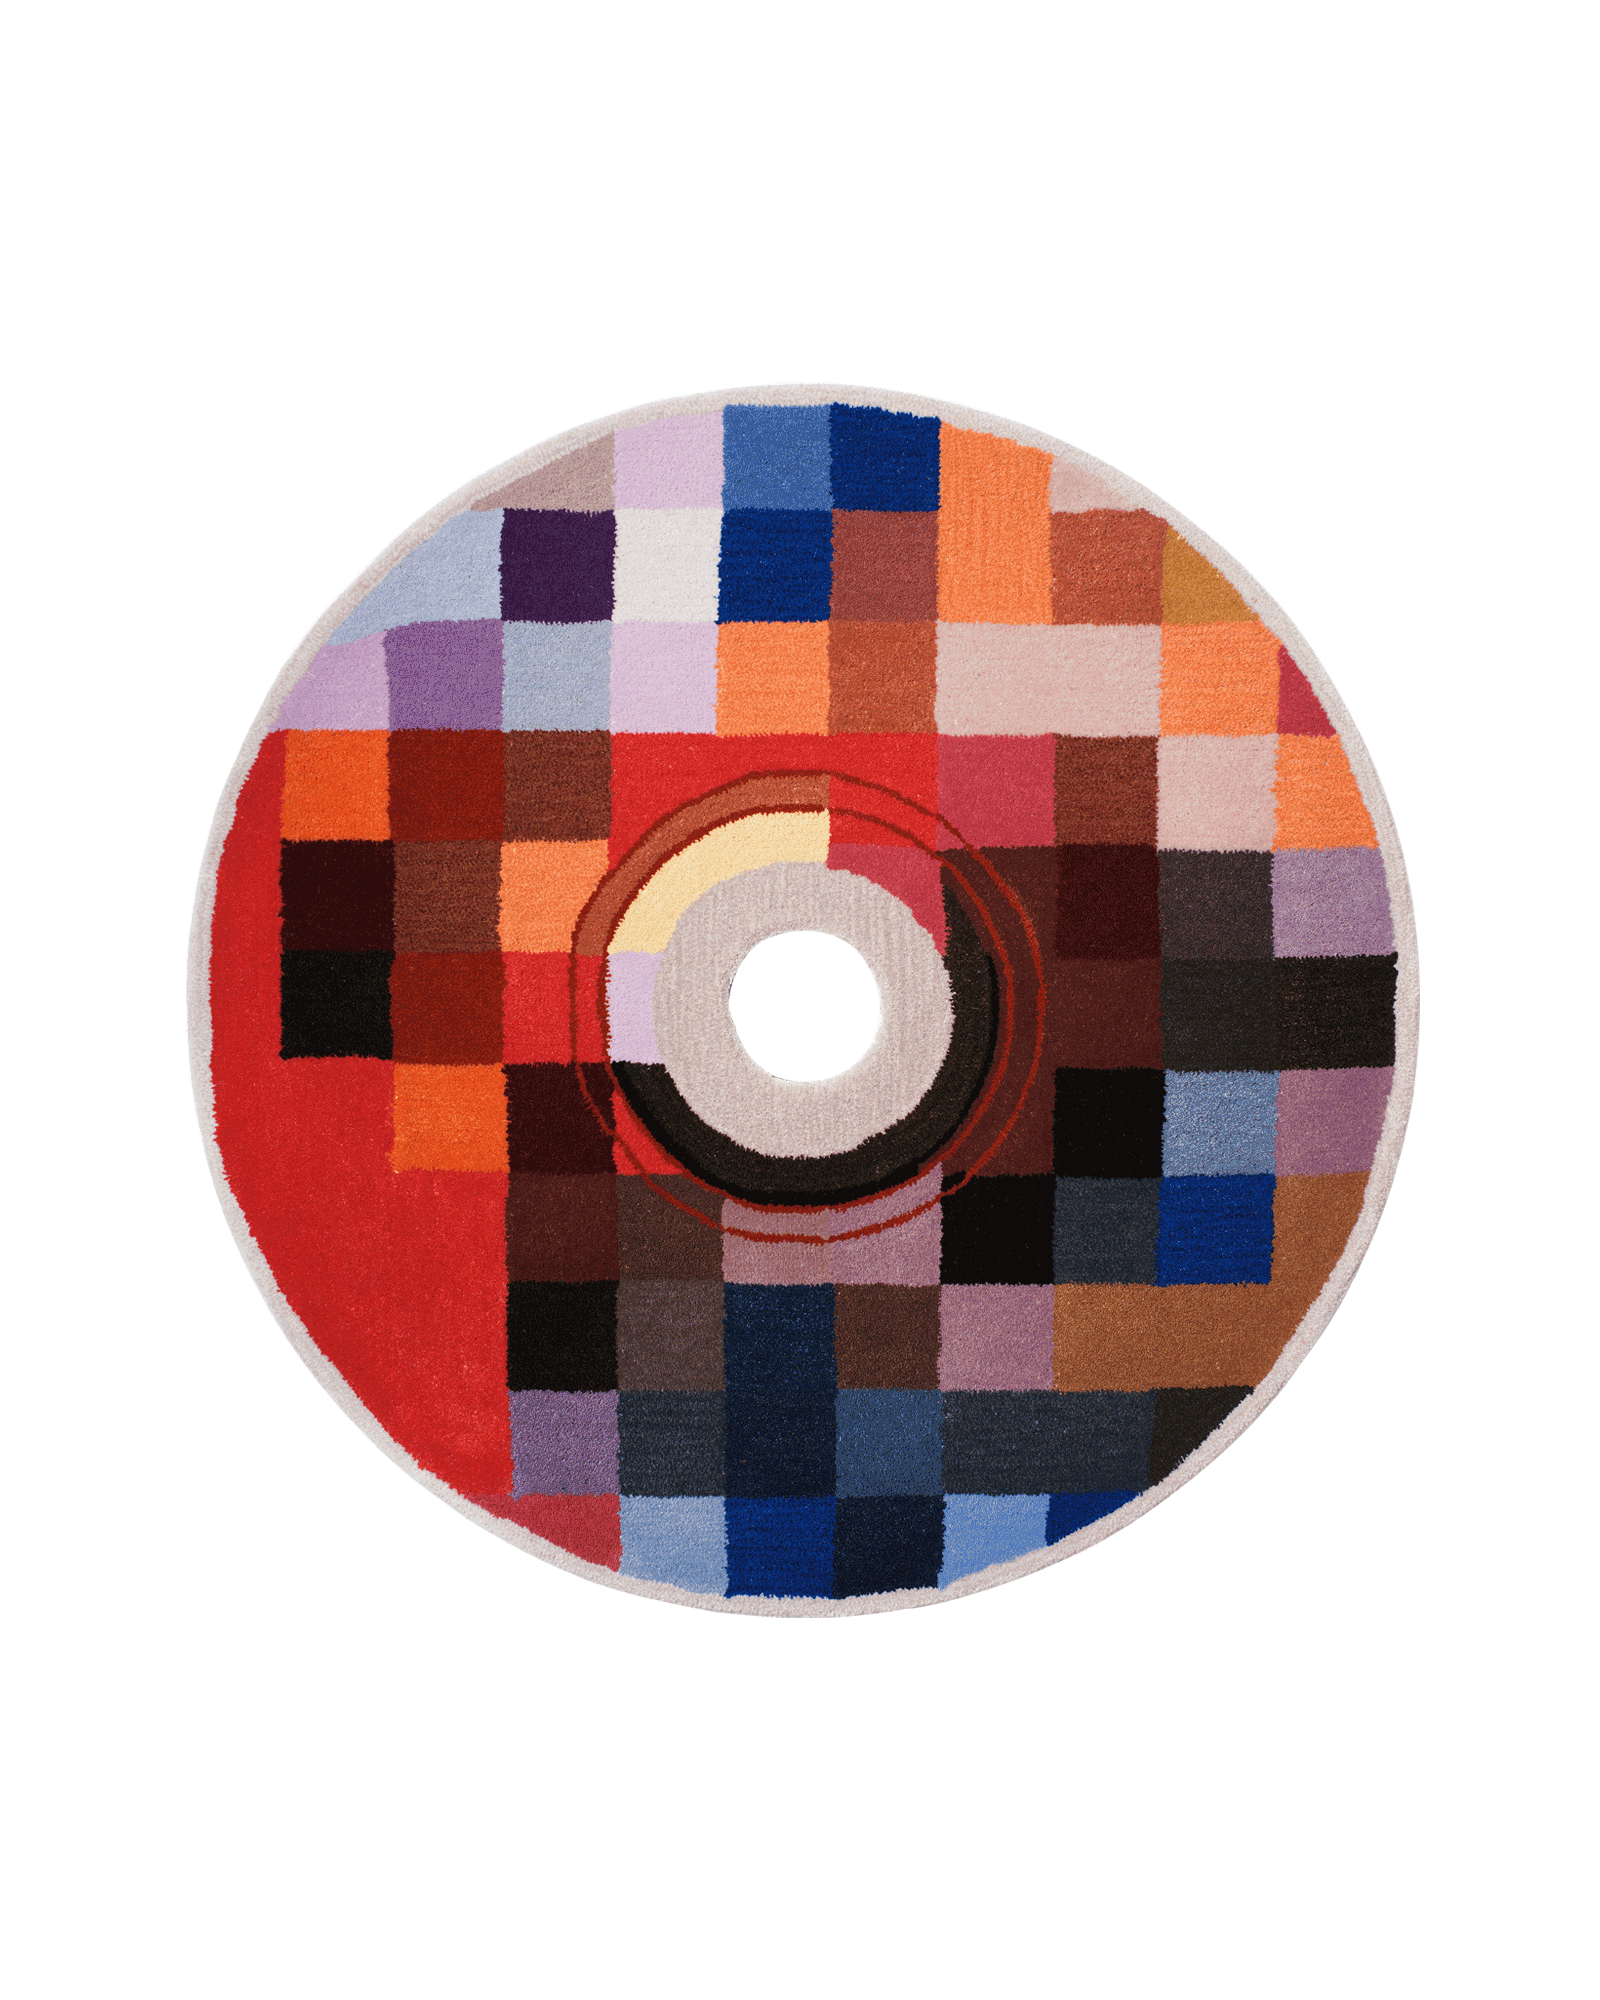 Handmade CD Rug (Kanye / MBDTF)